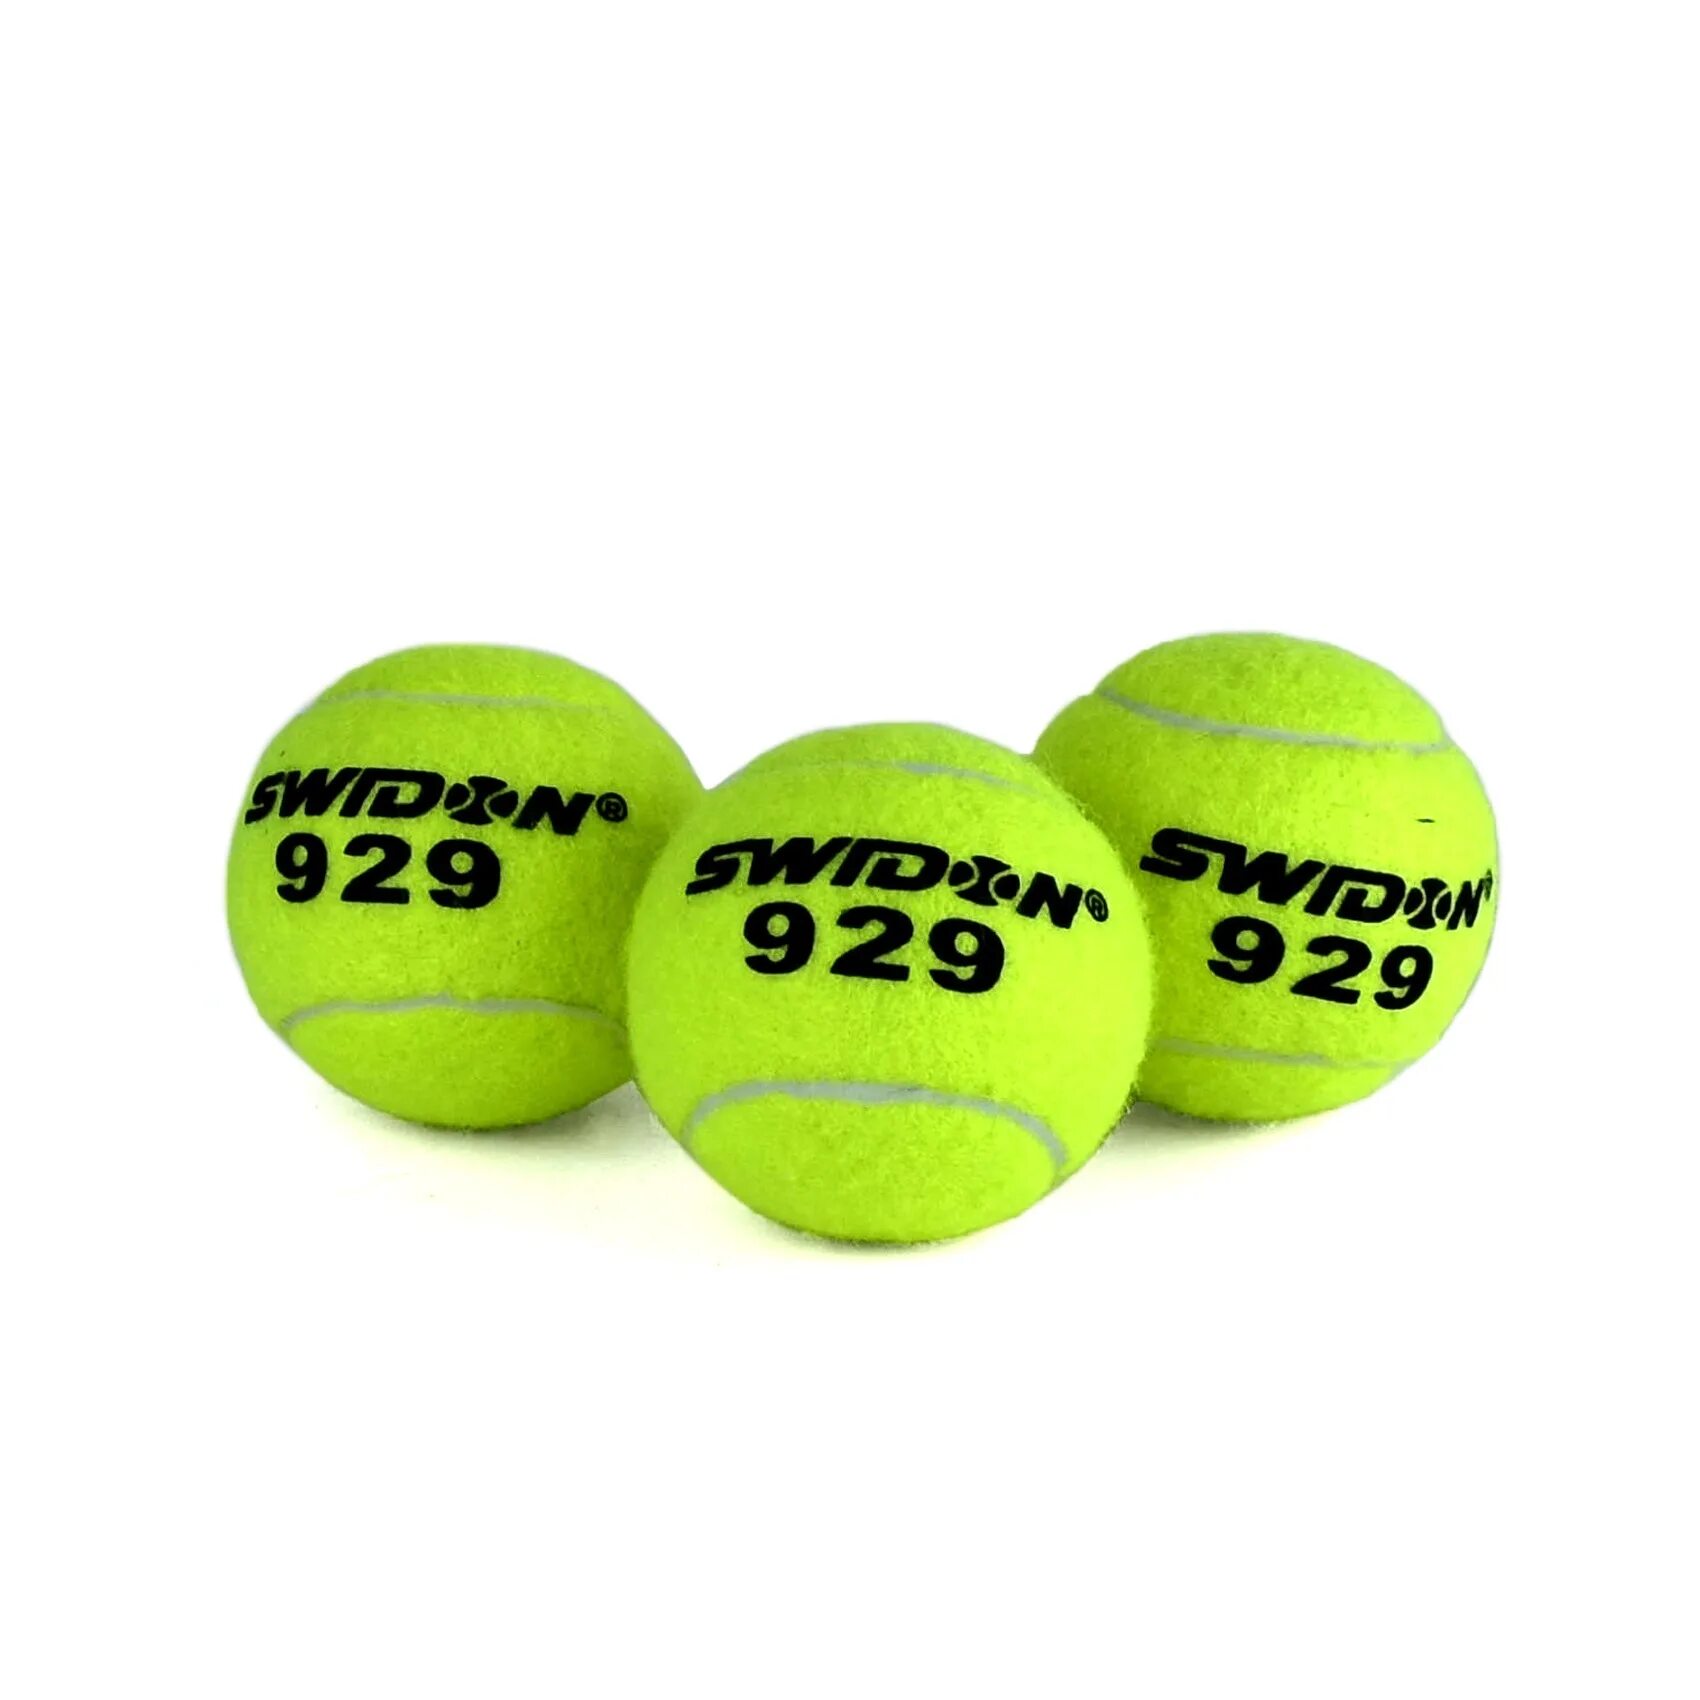 Мячи б т. Мяч теннисный Cliff swidon 929. Мяч для большого тенниса swidon s-909/1 1 шт. Мячи для большого тенниса swidon 909. Мяч большого тенниса Cliff 969.